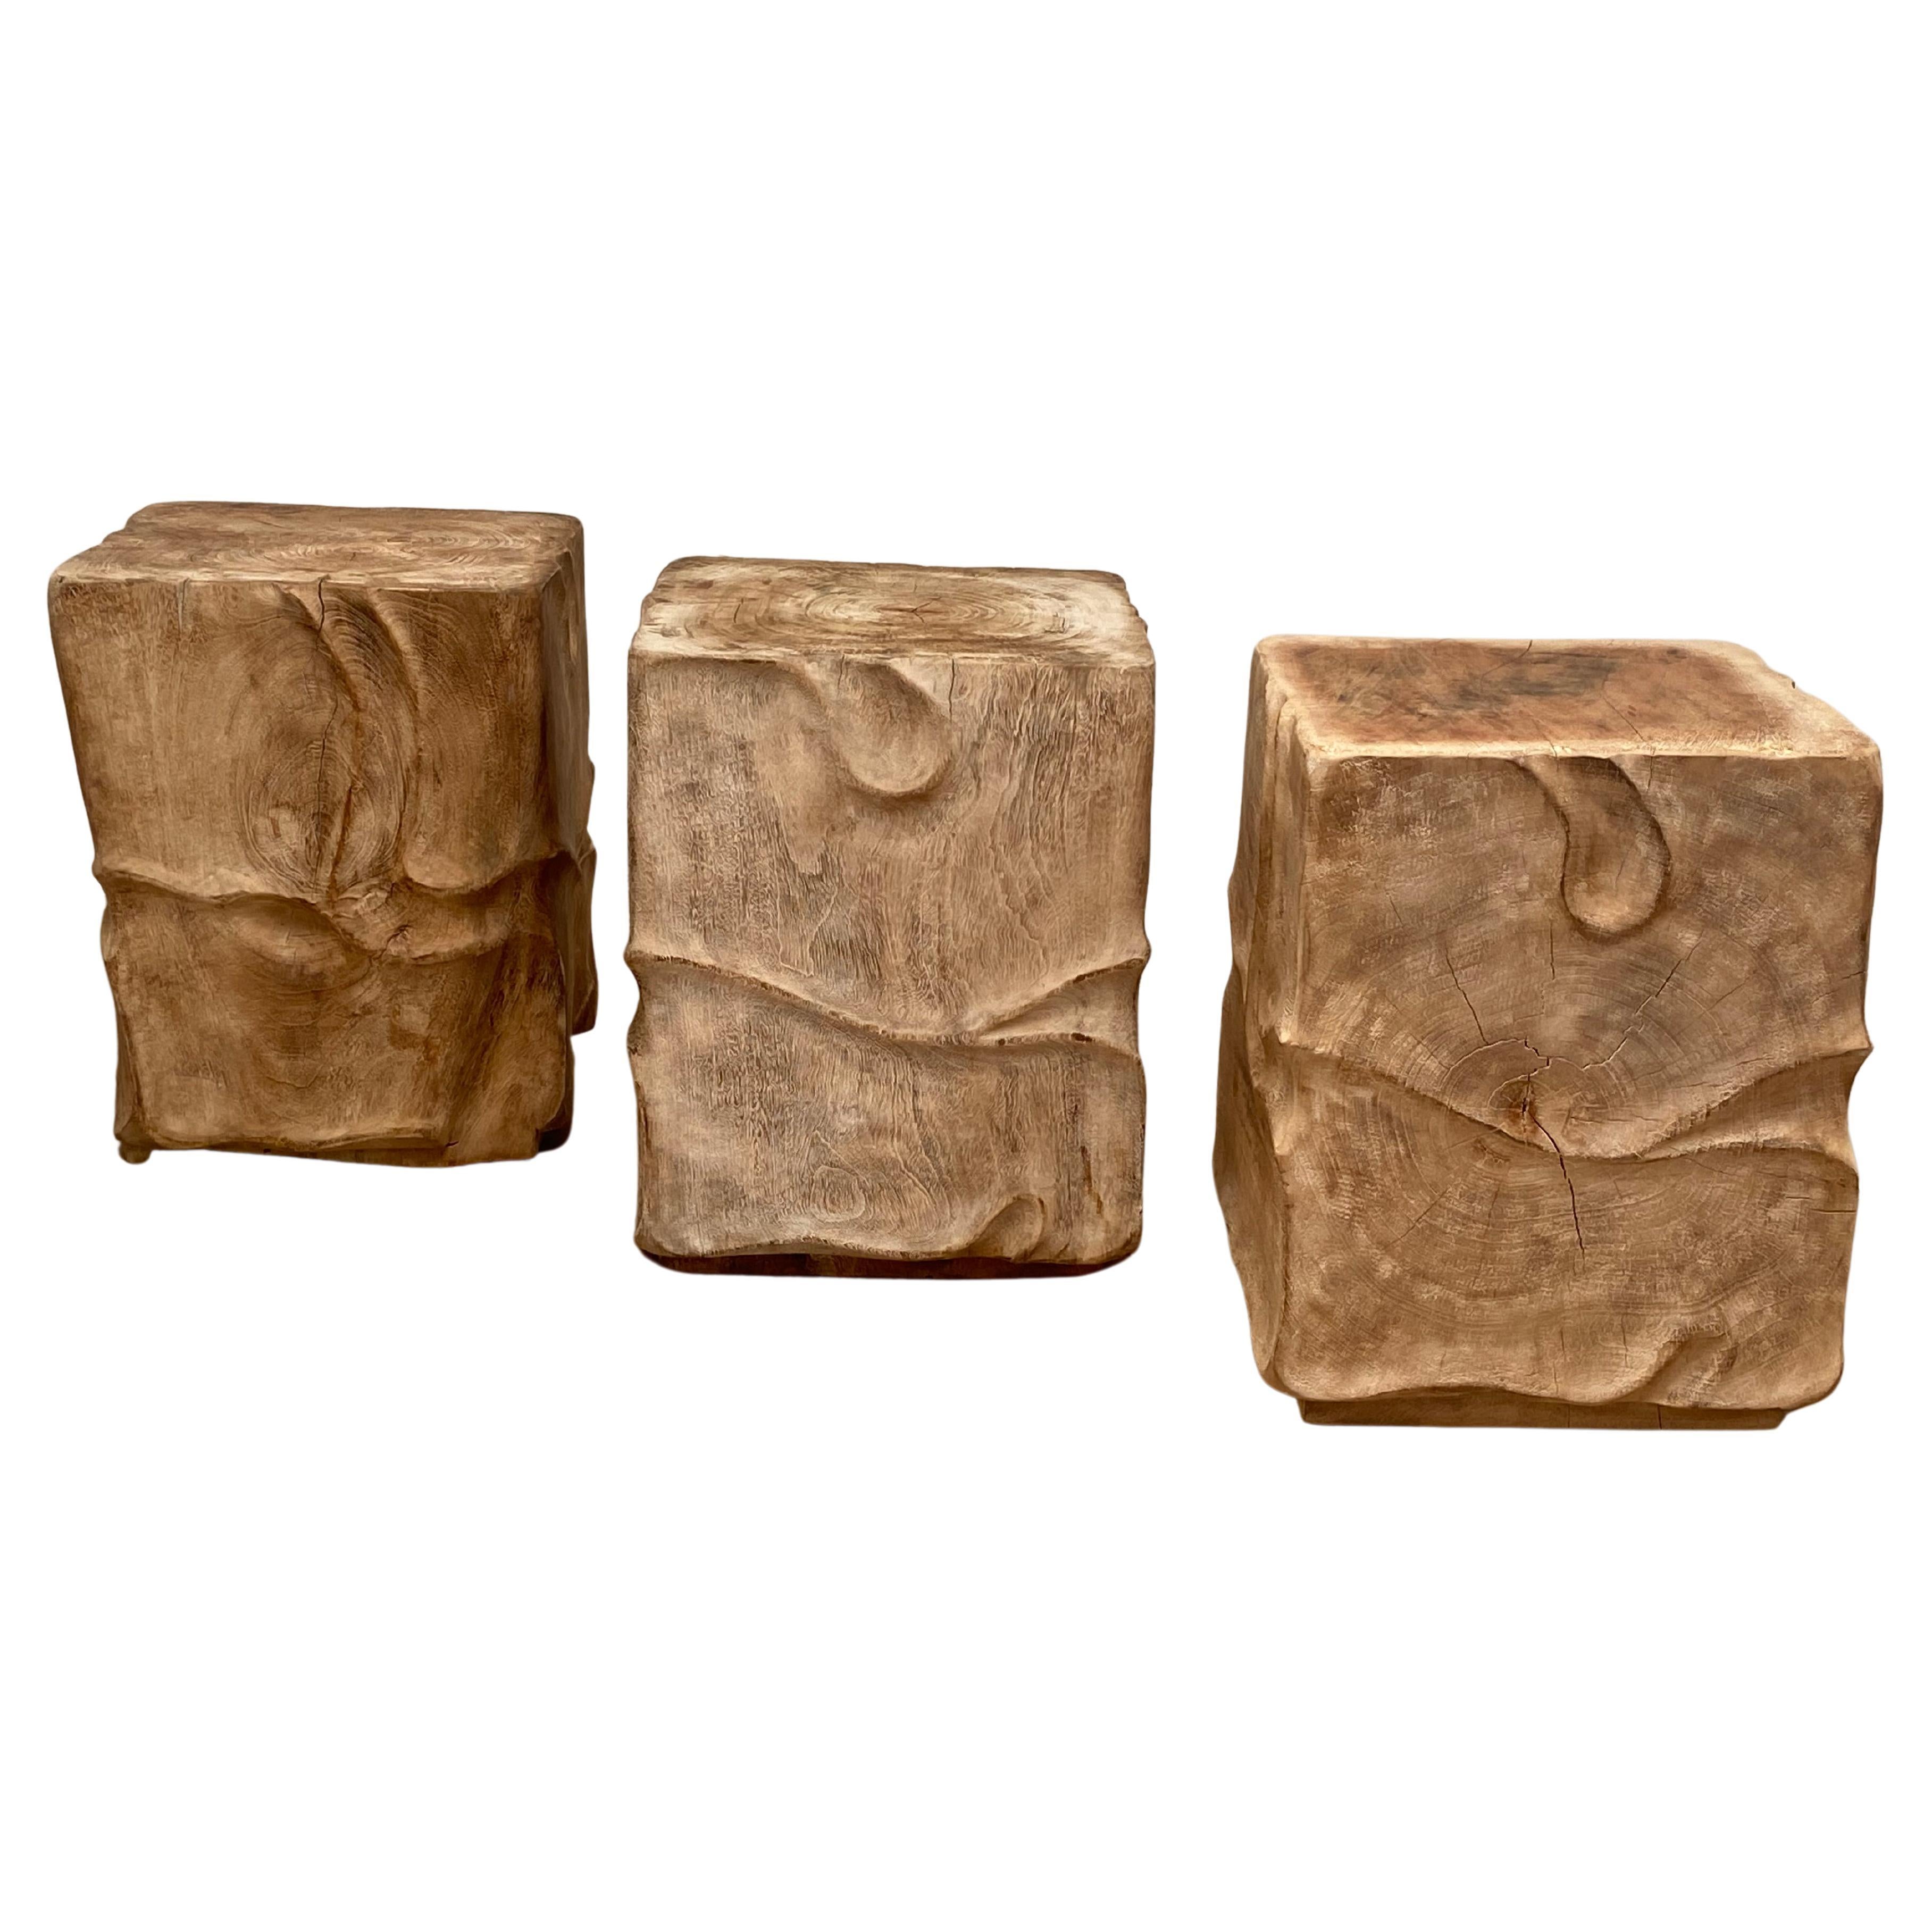  Set of 3 Rustic, Solid Wooden Blocks